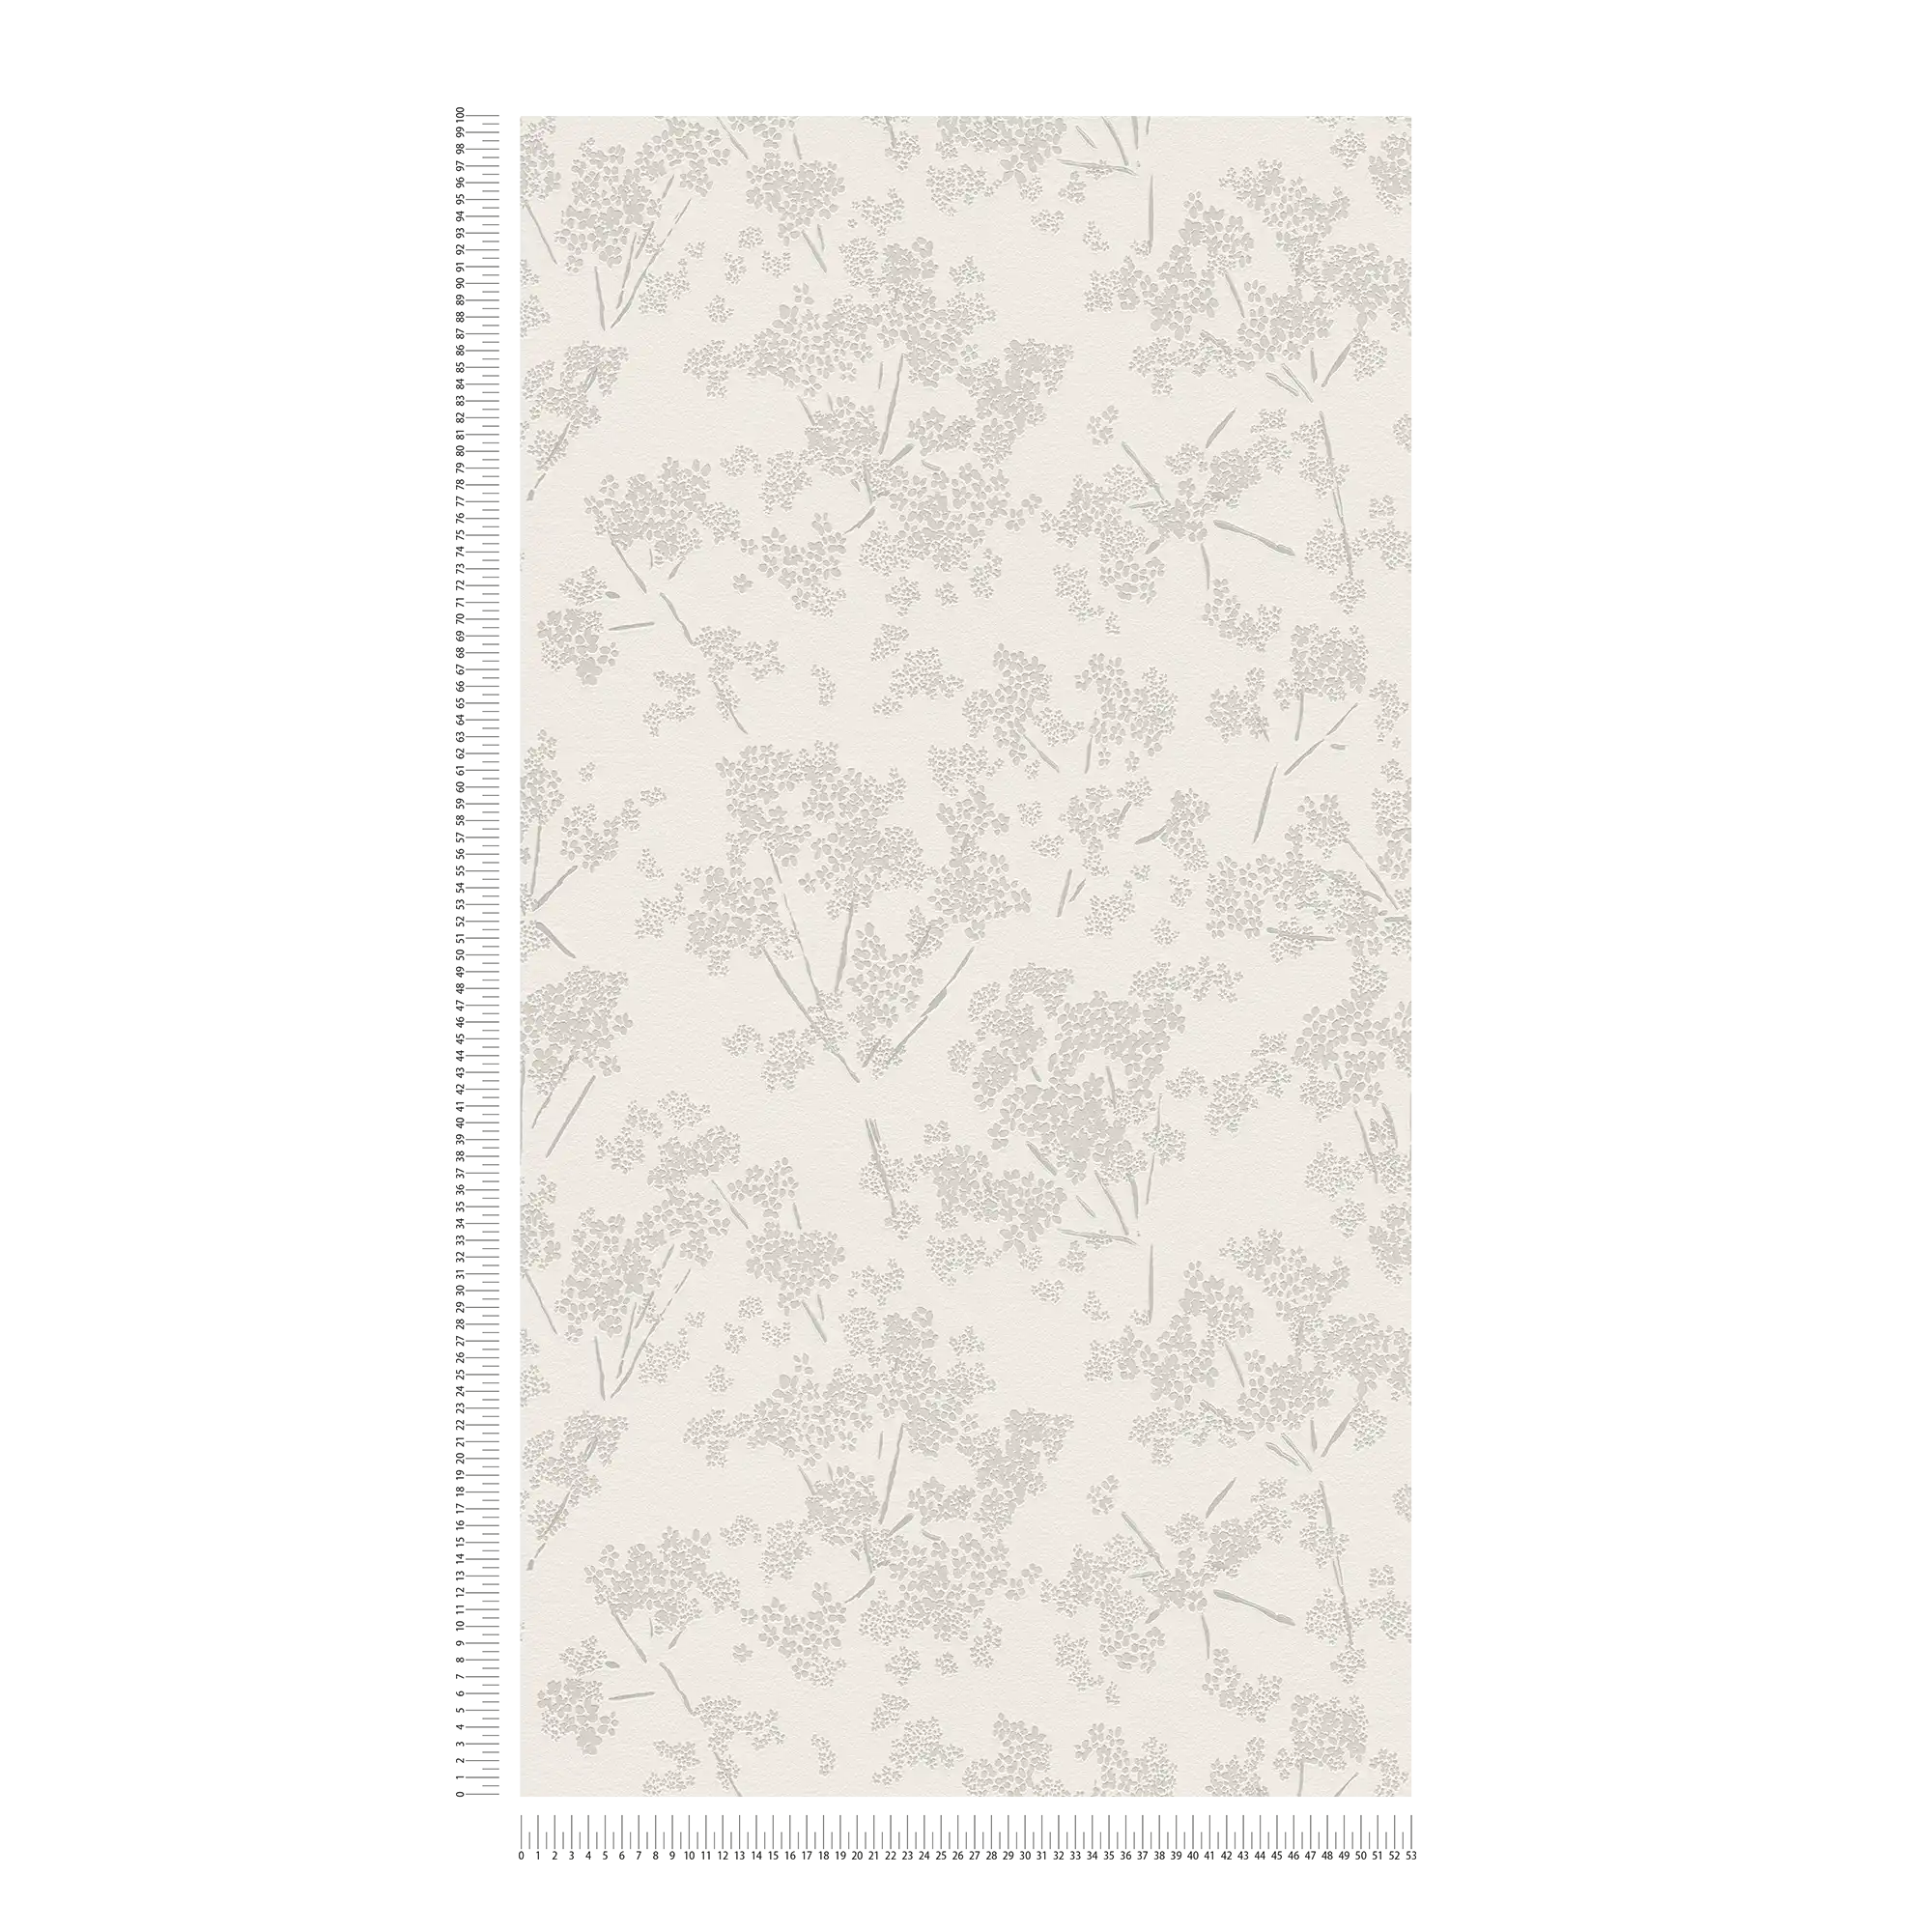             Vliestapete mit floralem Muster – Weiß, Grau
        